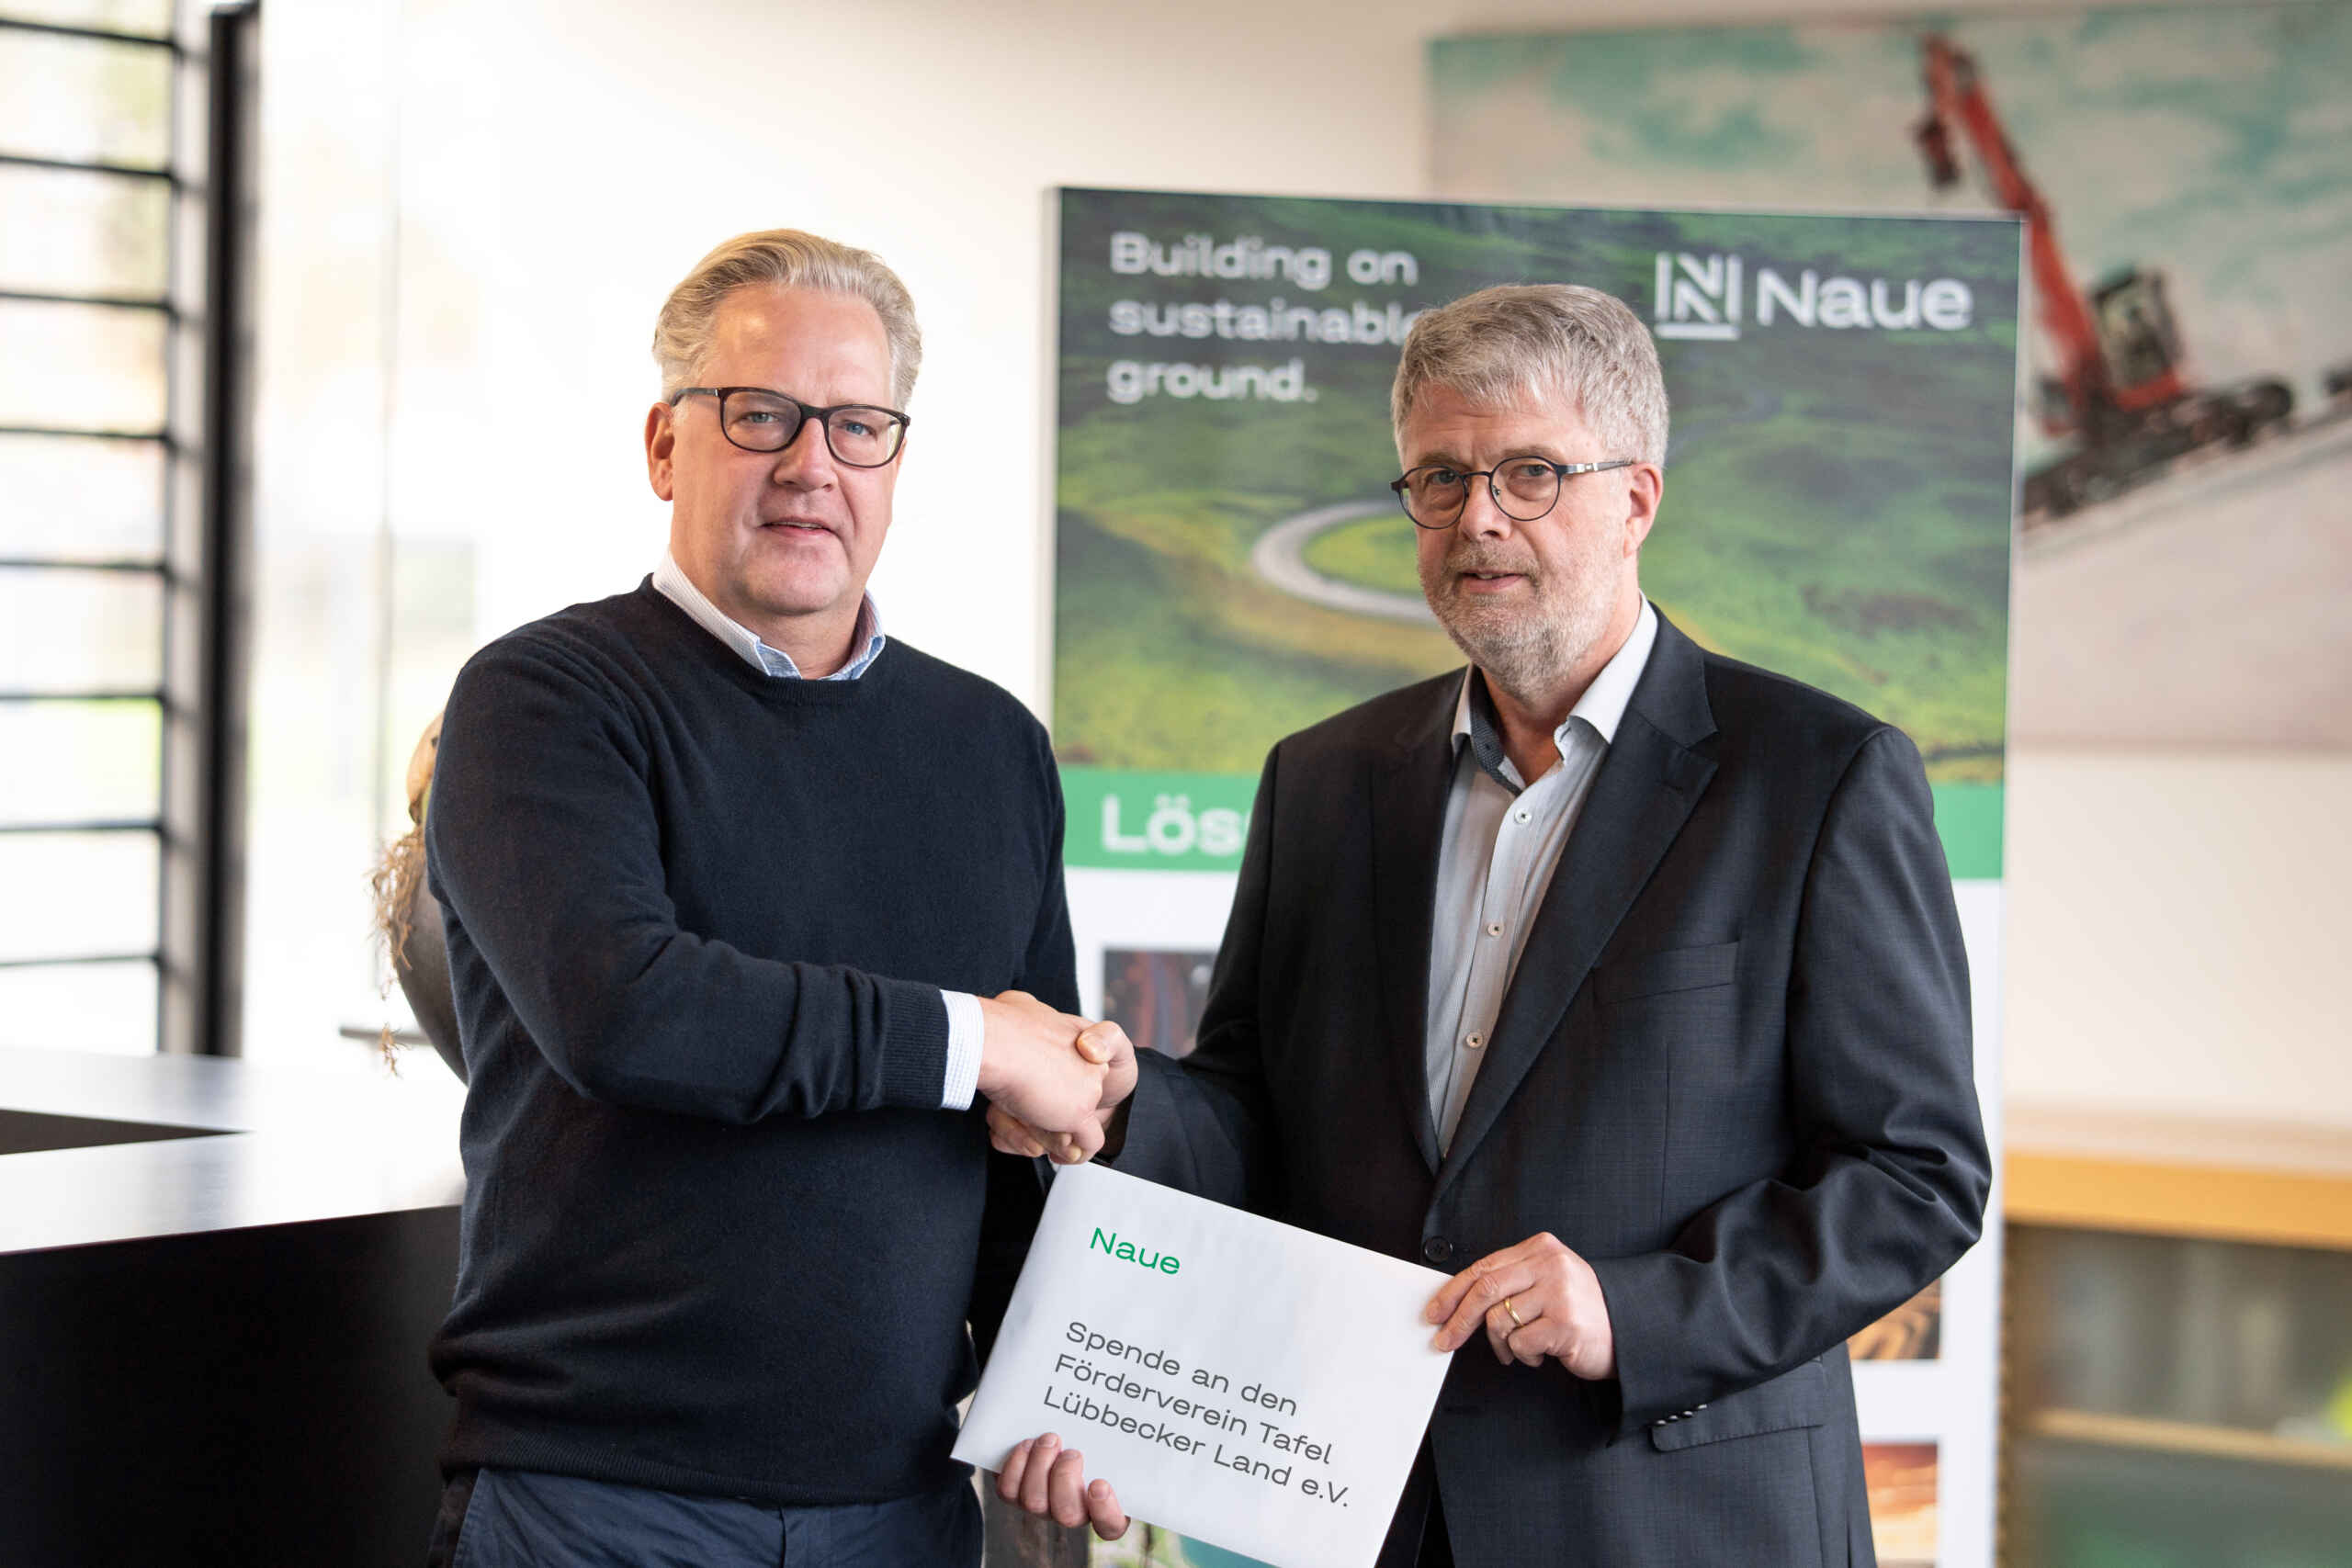 Sebastian Naue presents a donation to Mr Obernolte from the Luebbecker Land food bank support association